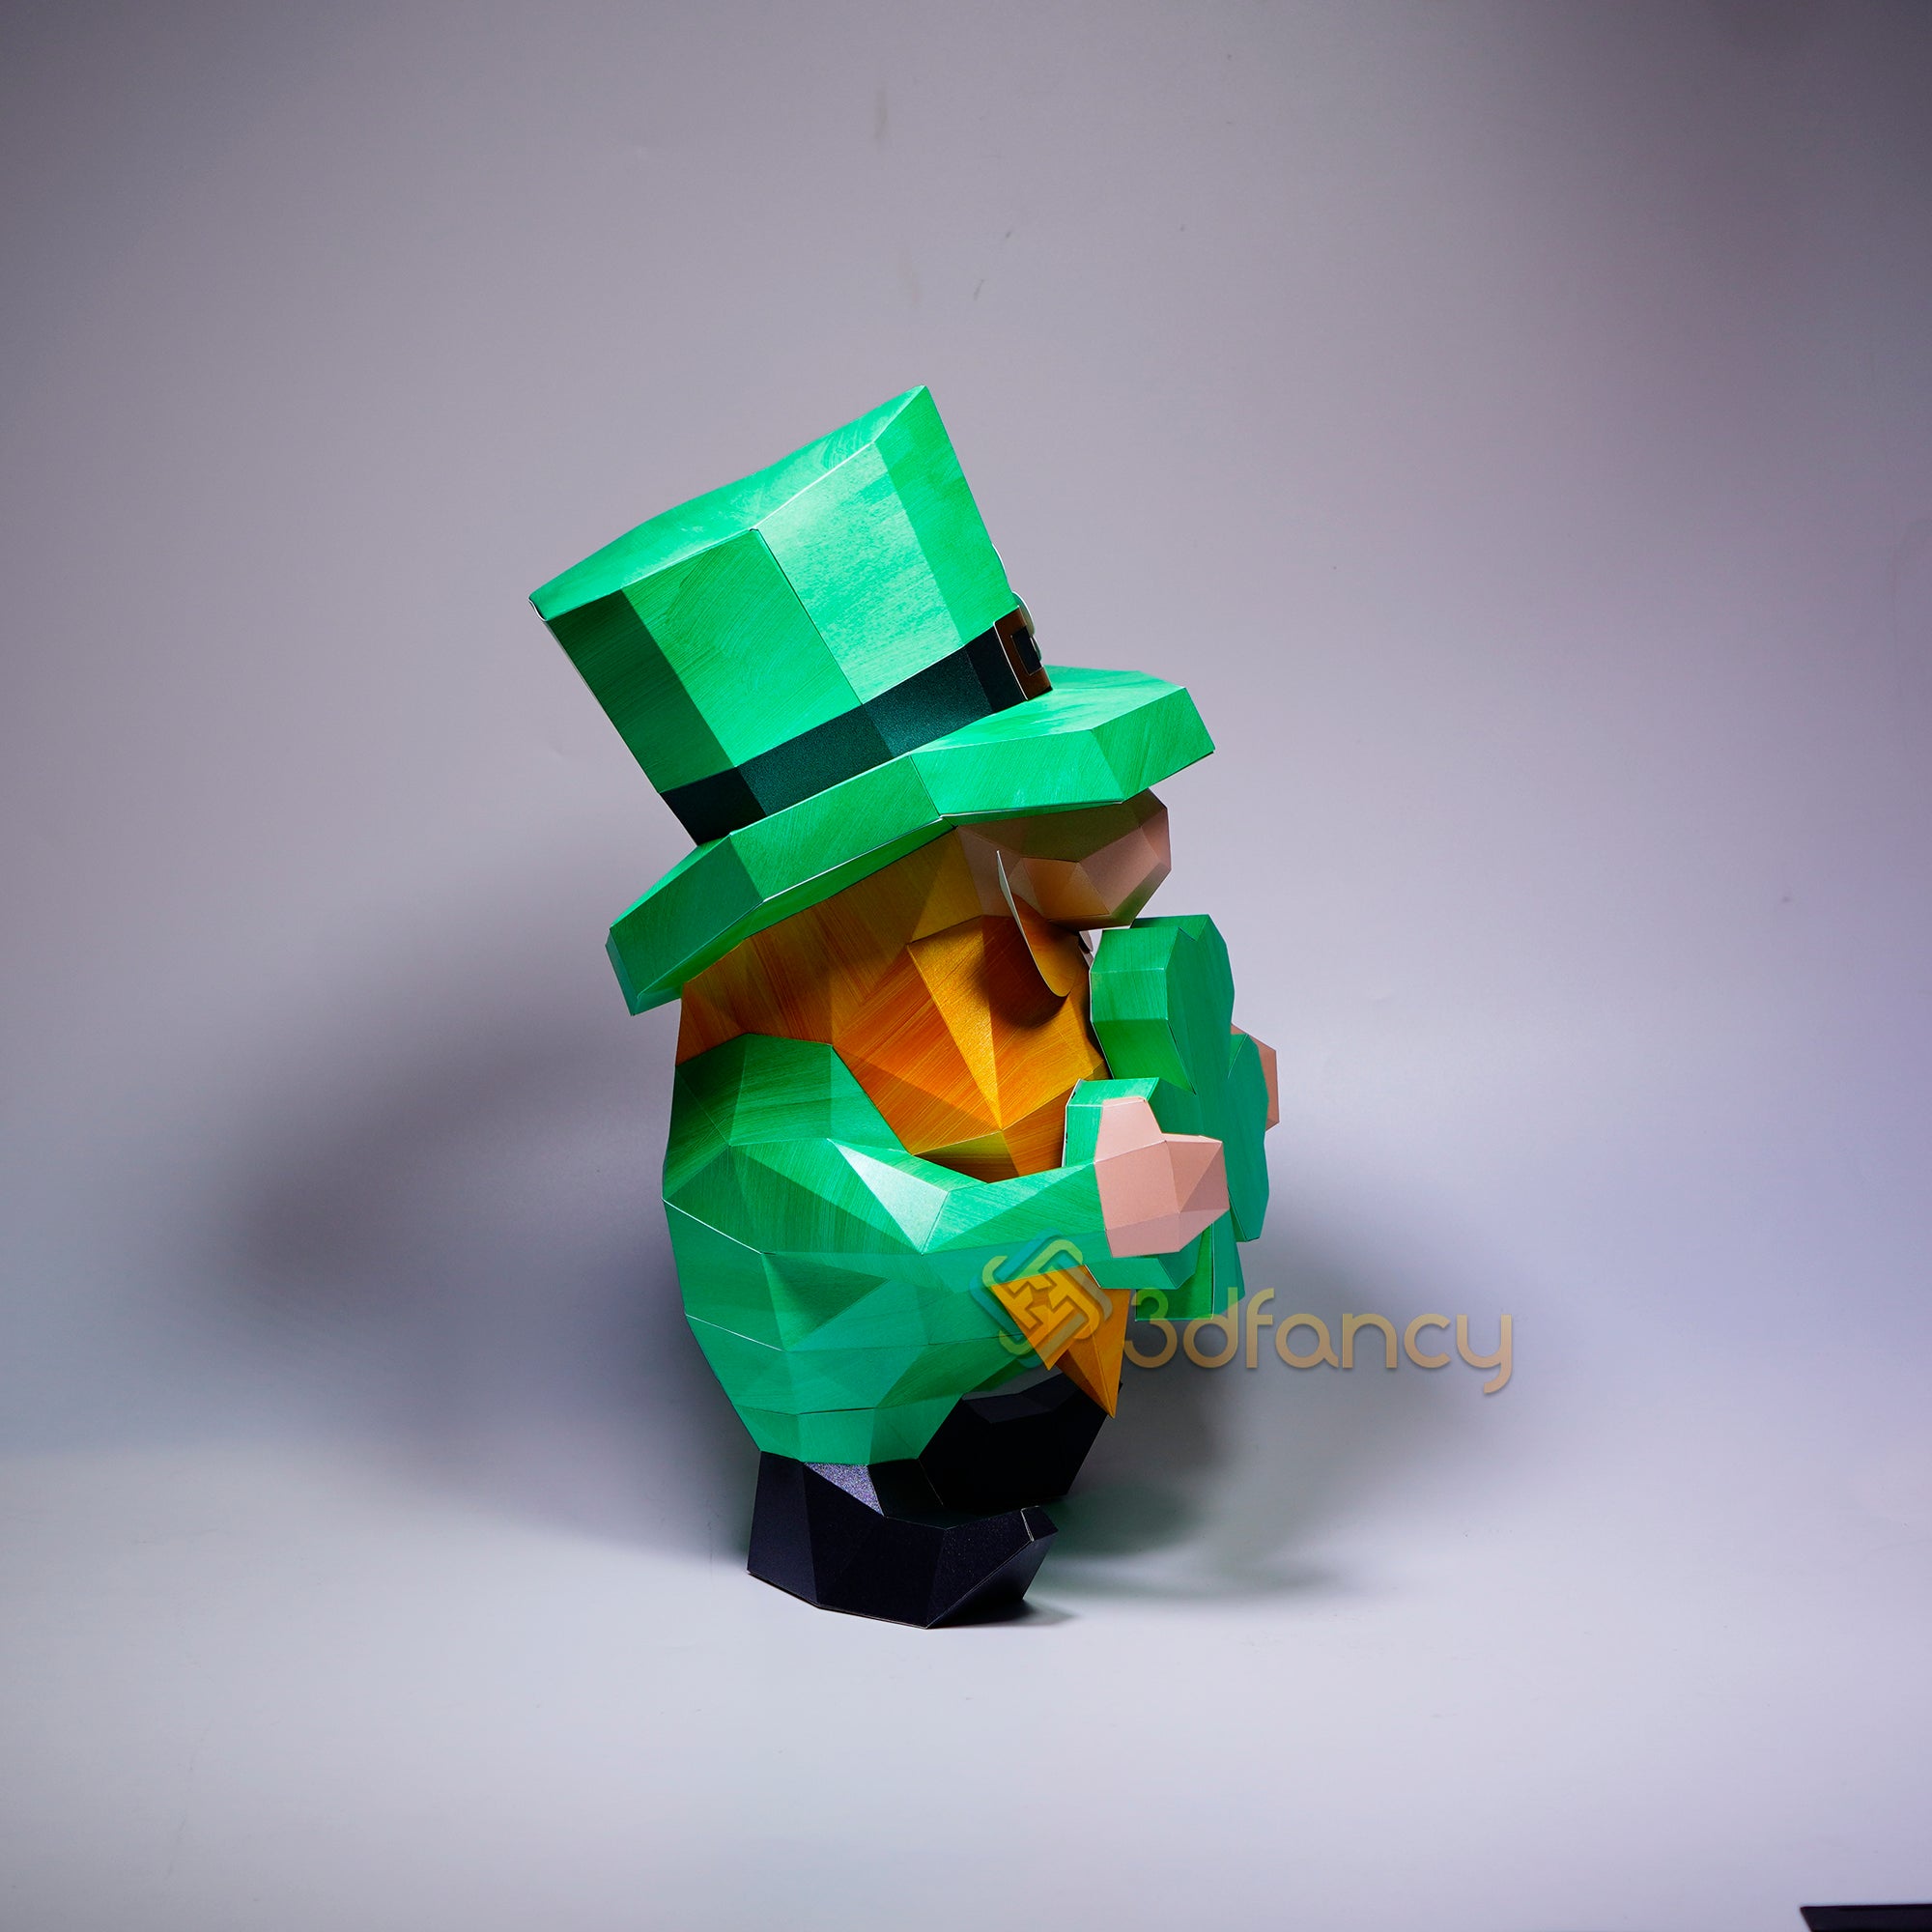 3D Papercraft Gnome Leprechaun PDF, SVG, Silhouette Studio Template For Creating St. Patrick's Day Decor